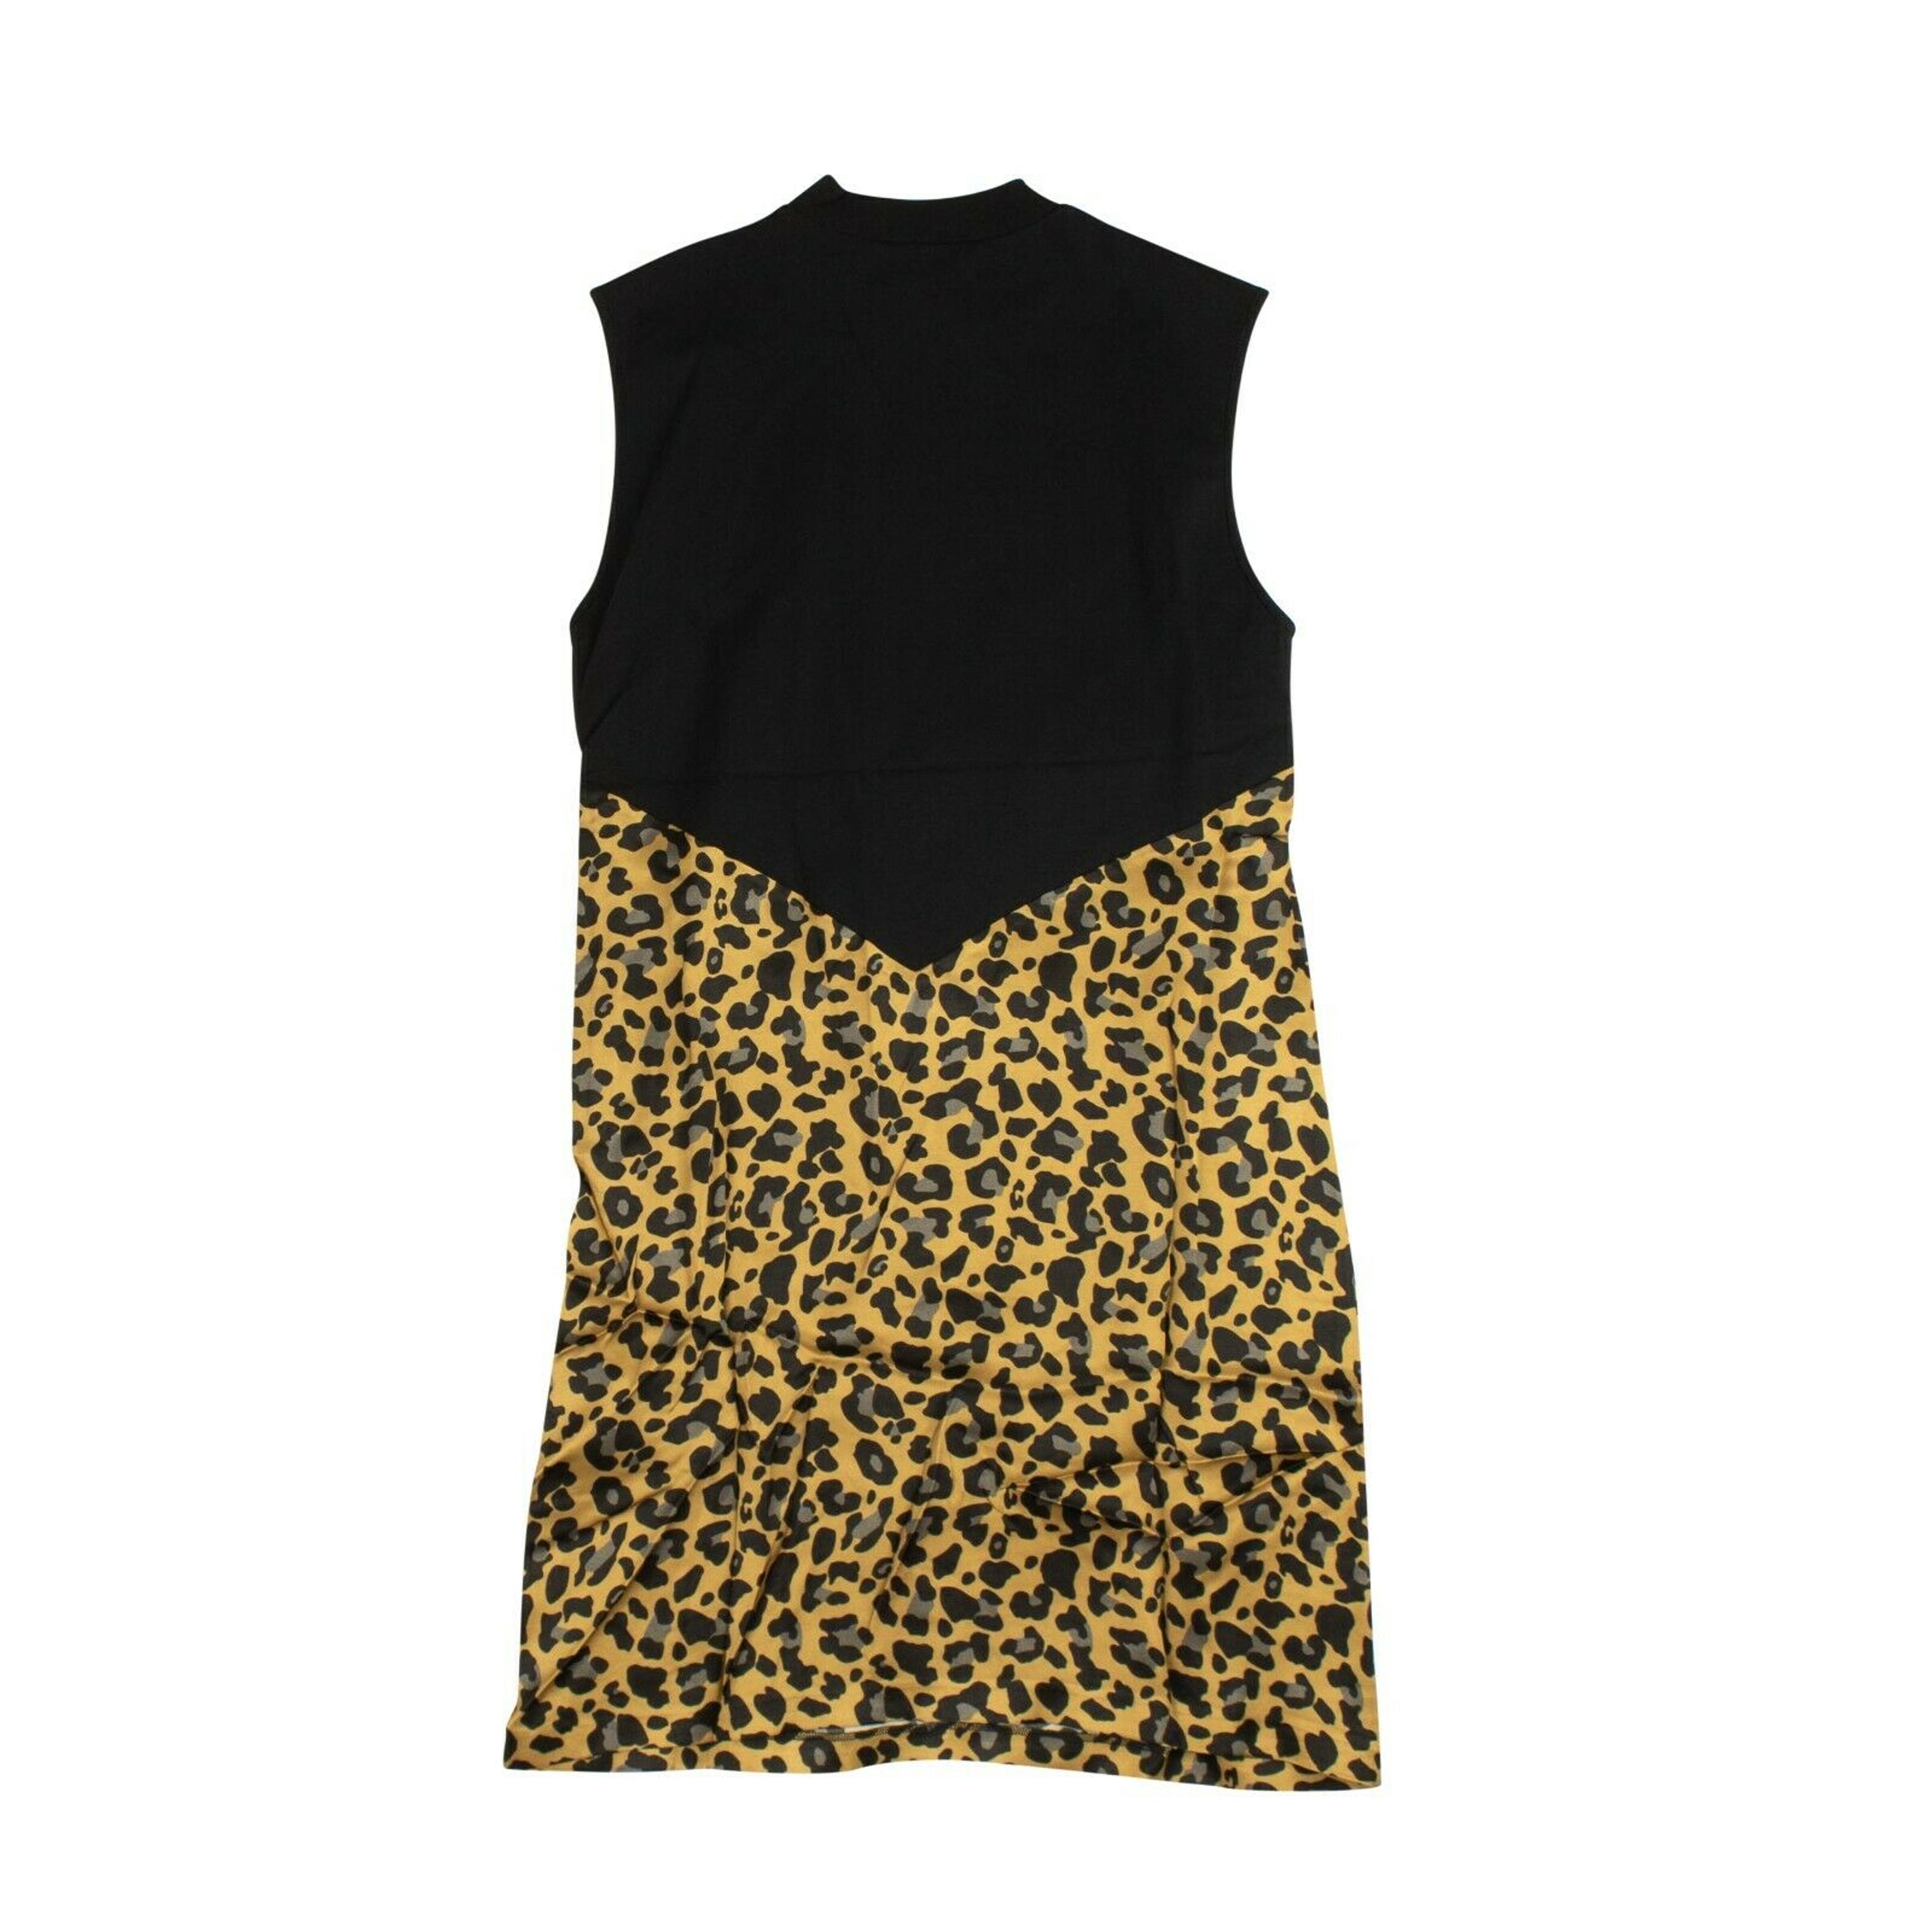 Alternate View 1 of Marcelo Burlon Print Sleeveless Dress - Black/Leopard